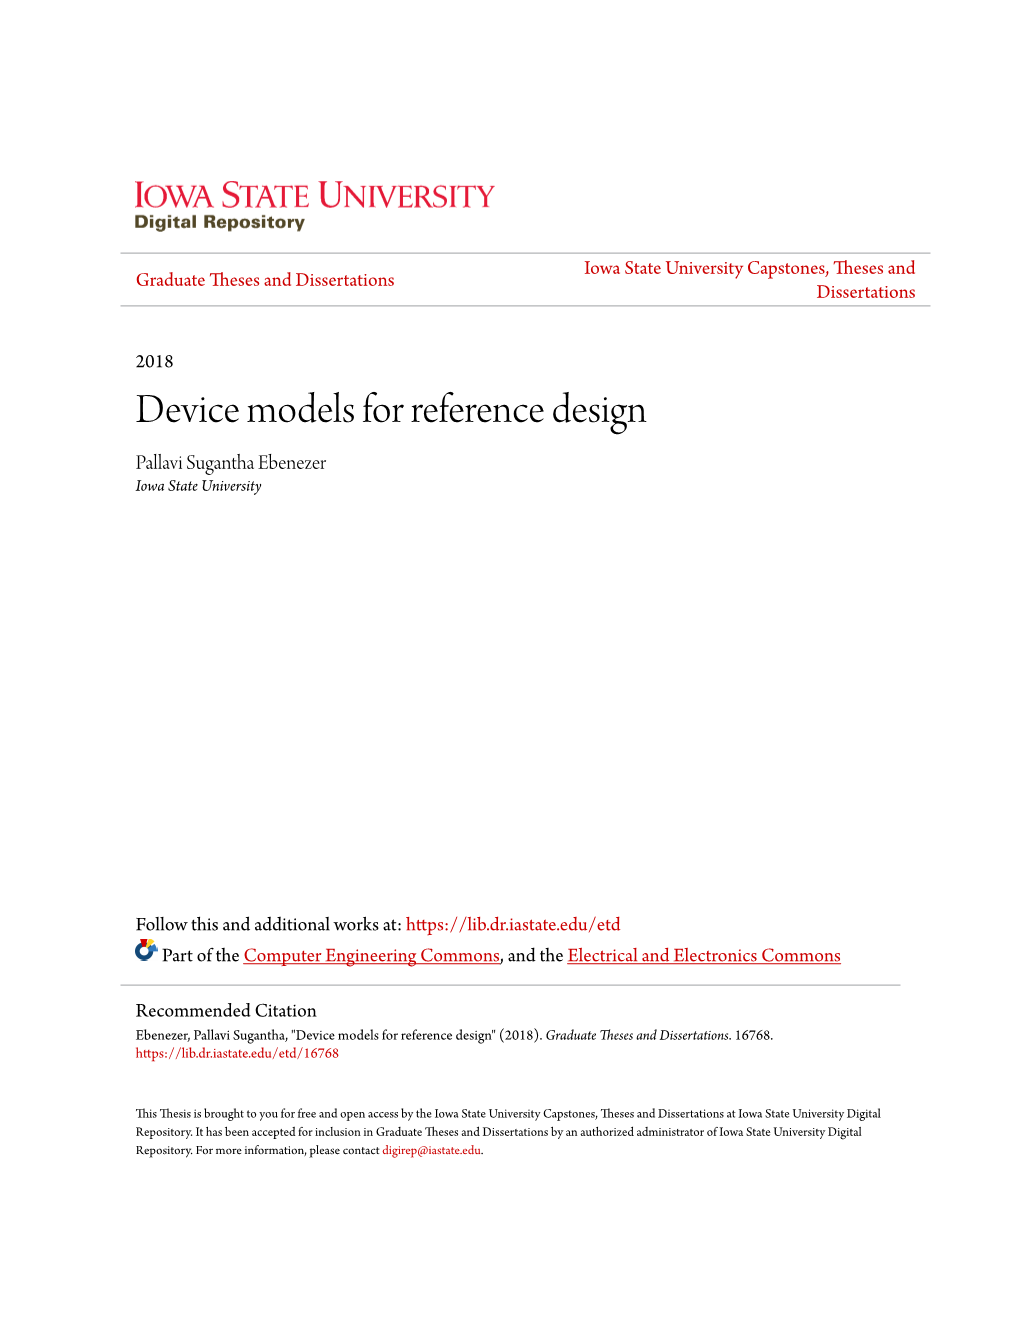 Device Models for Reference Design Pallavi Sugantha Ebenezer Iowa State University